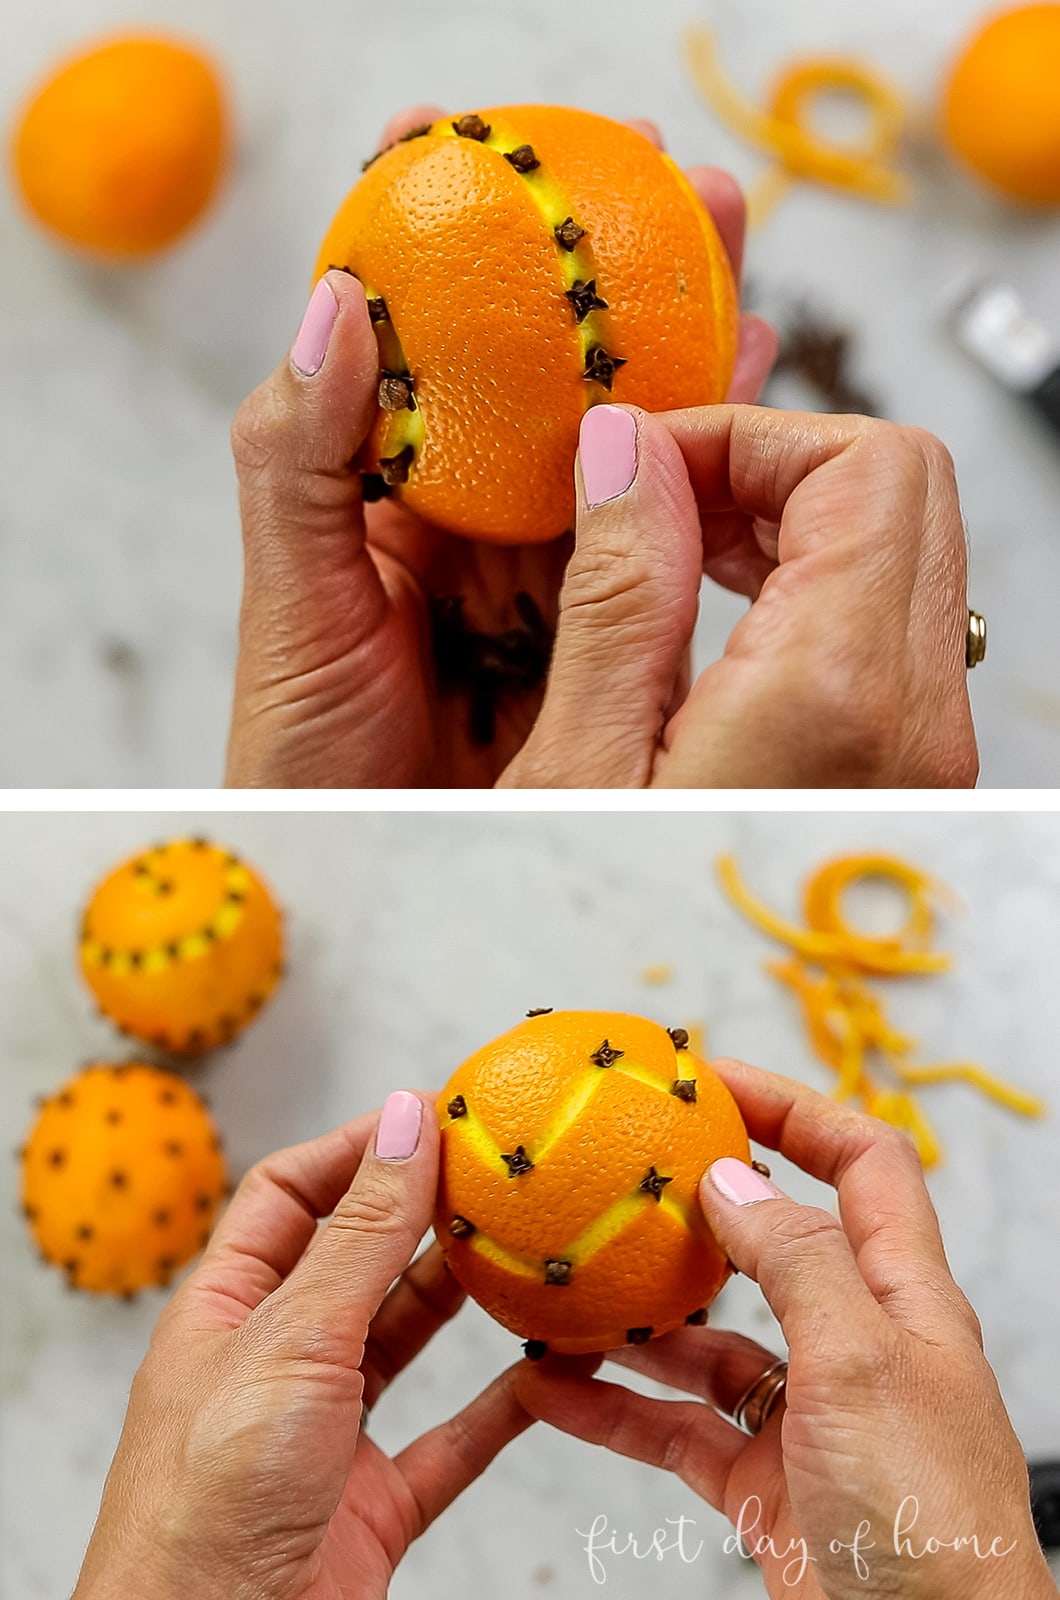 Steps showing how to dry orange pomander balls using cloves